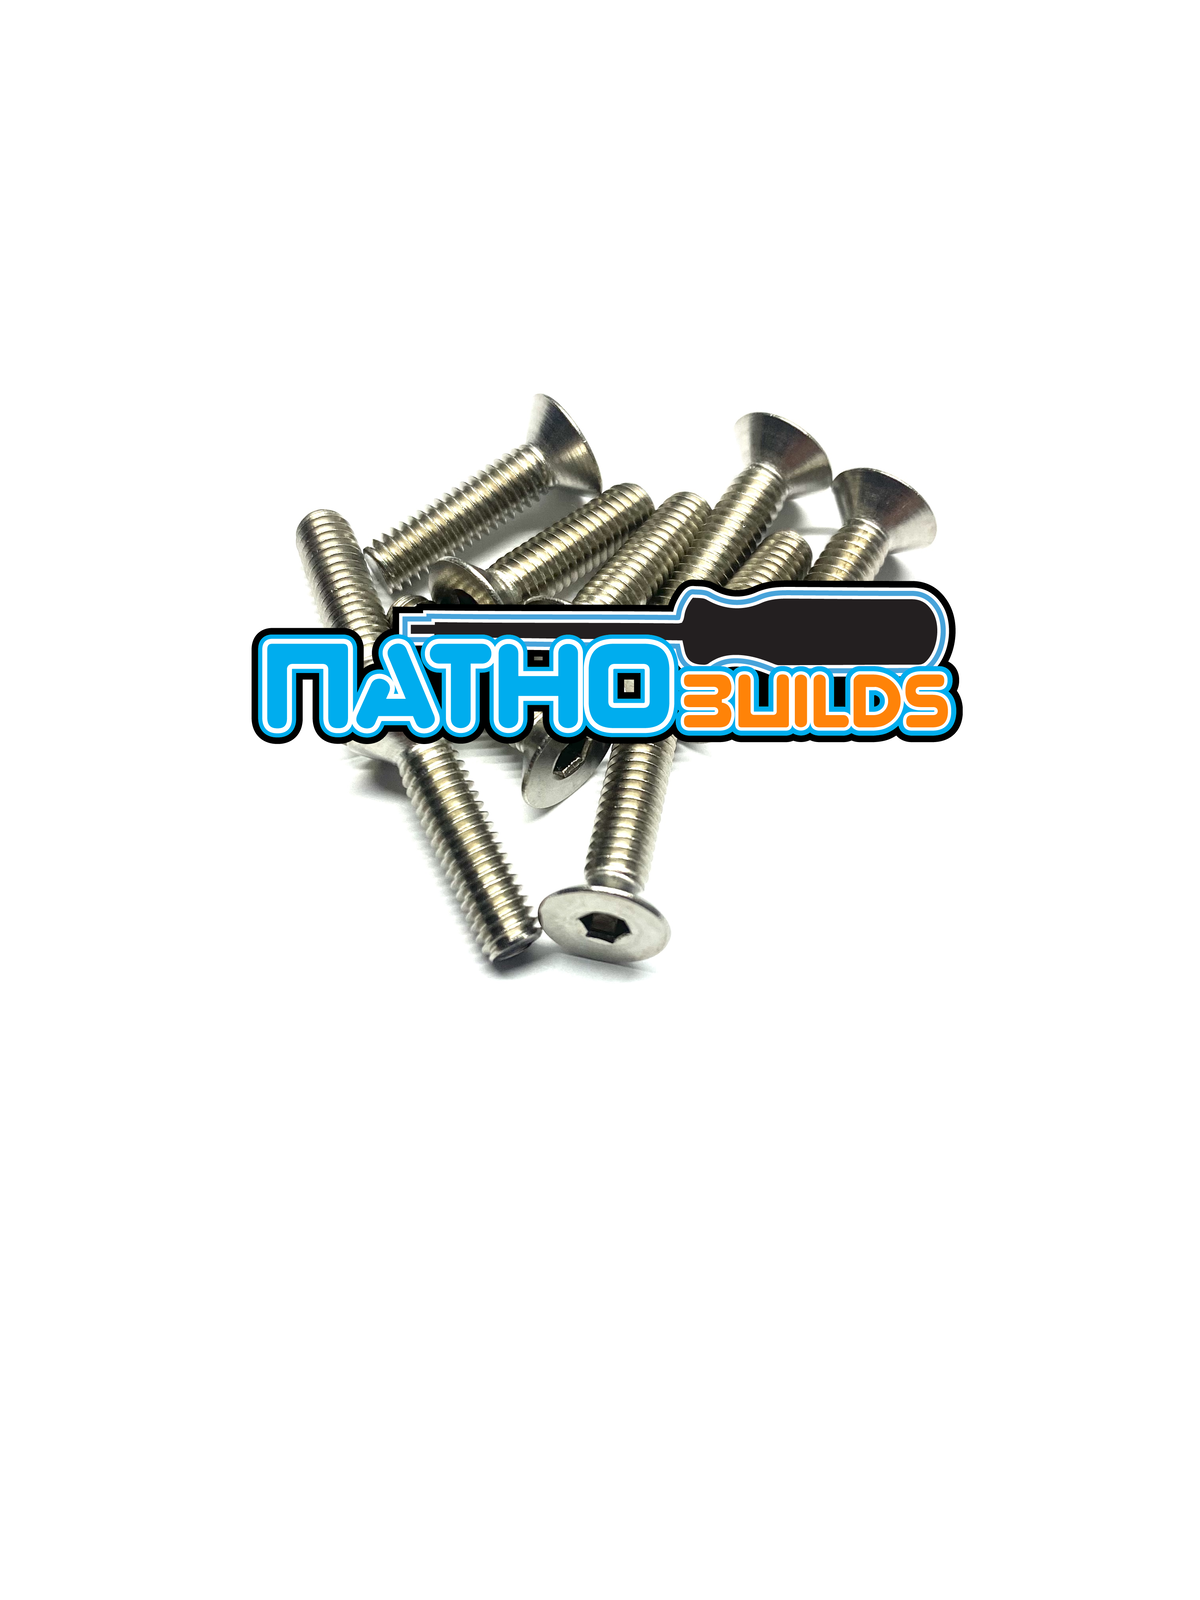 NathoBuilds: Stainless Steel Screws Flat Head 10pc